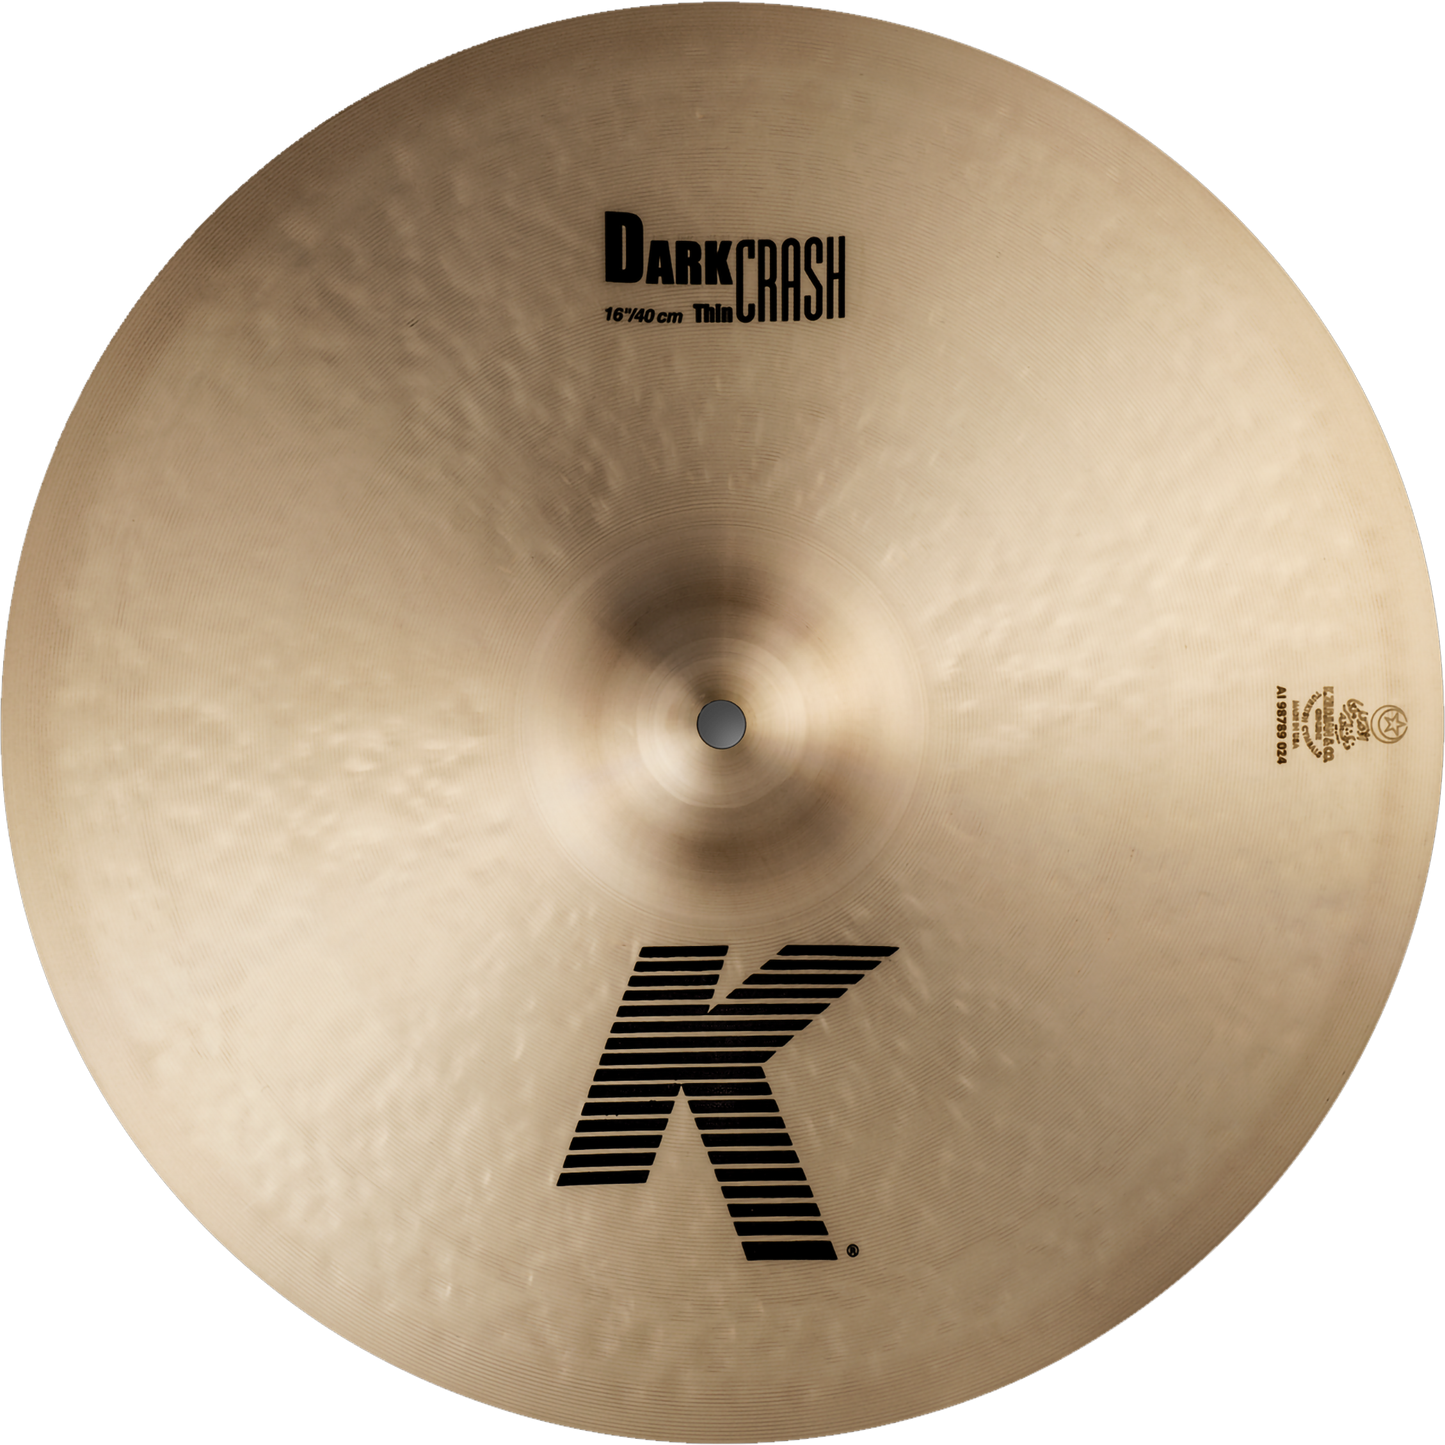 Zildjian 16” K Series Dark Thin Crash Cymbal